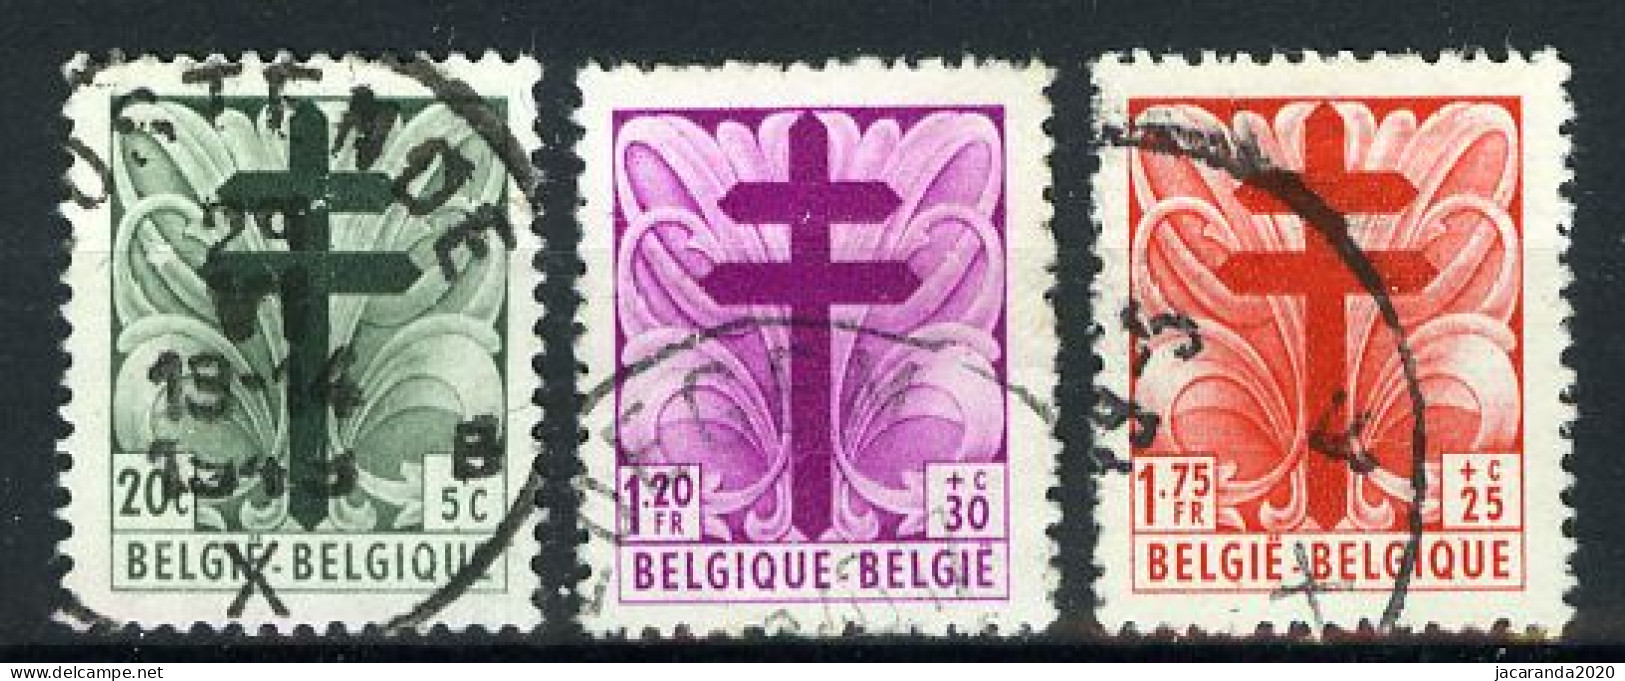 België 787/89 - Antitering - Kruis Van Lotharingen - Portretten Van De Senaat III - Gestempeld - Oblitéré - Used - Used Stamps